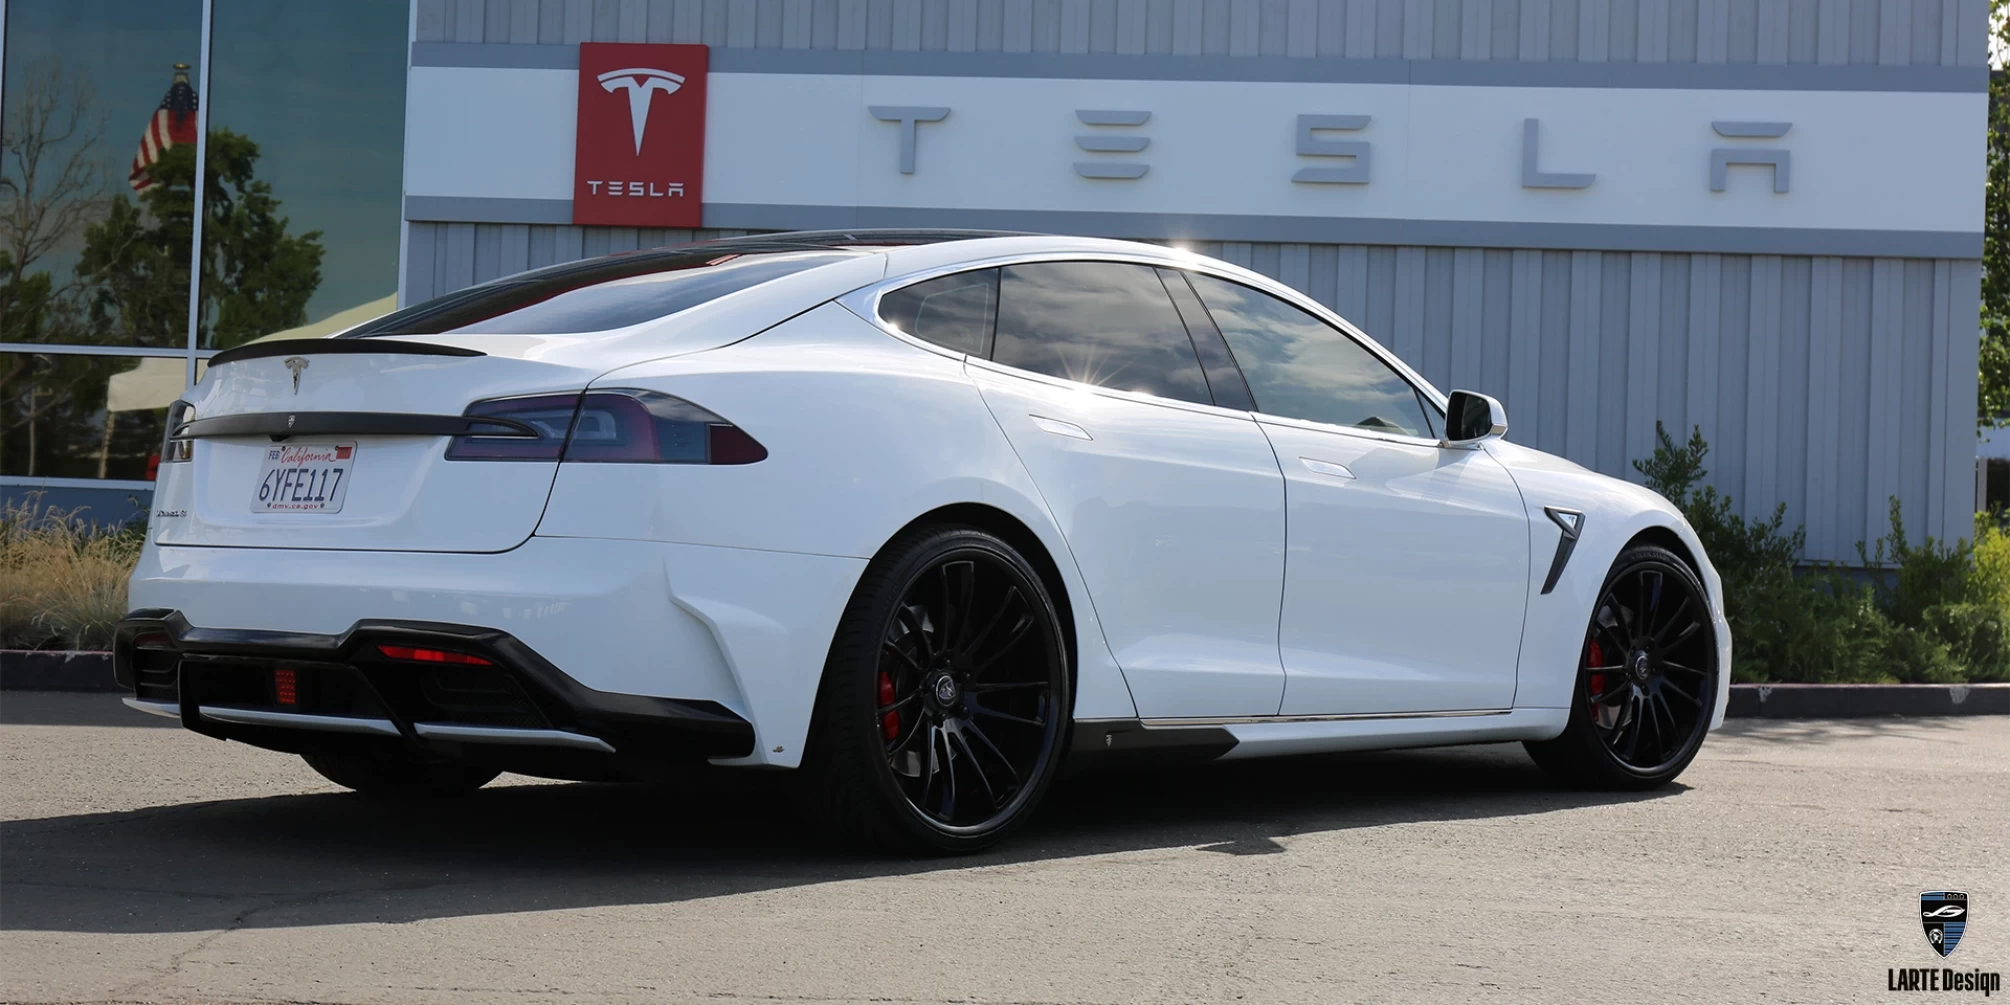 Tesla Model S Tuning: Bodykit von Larte Design